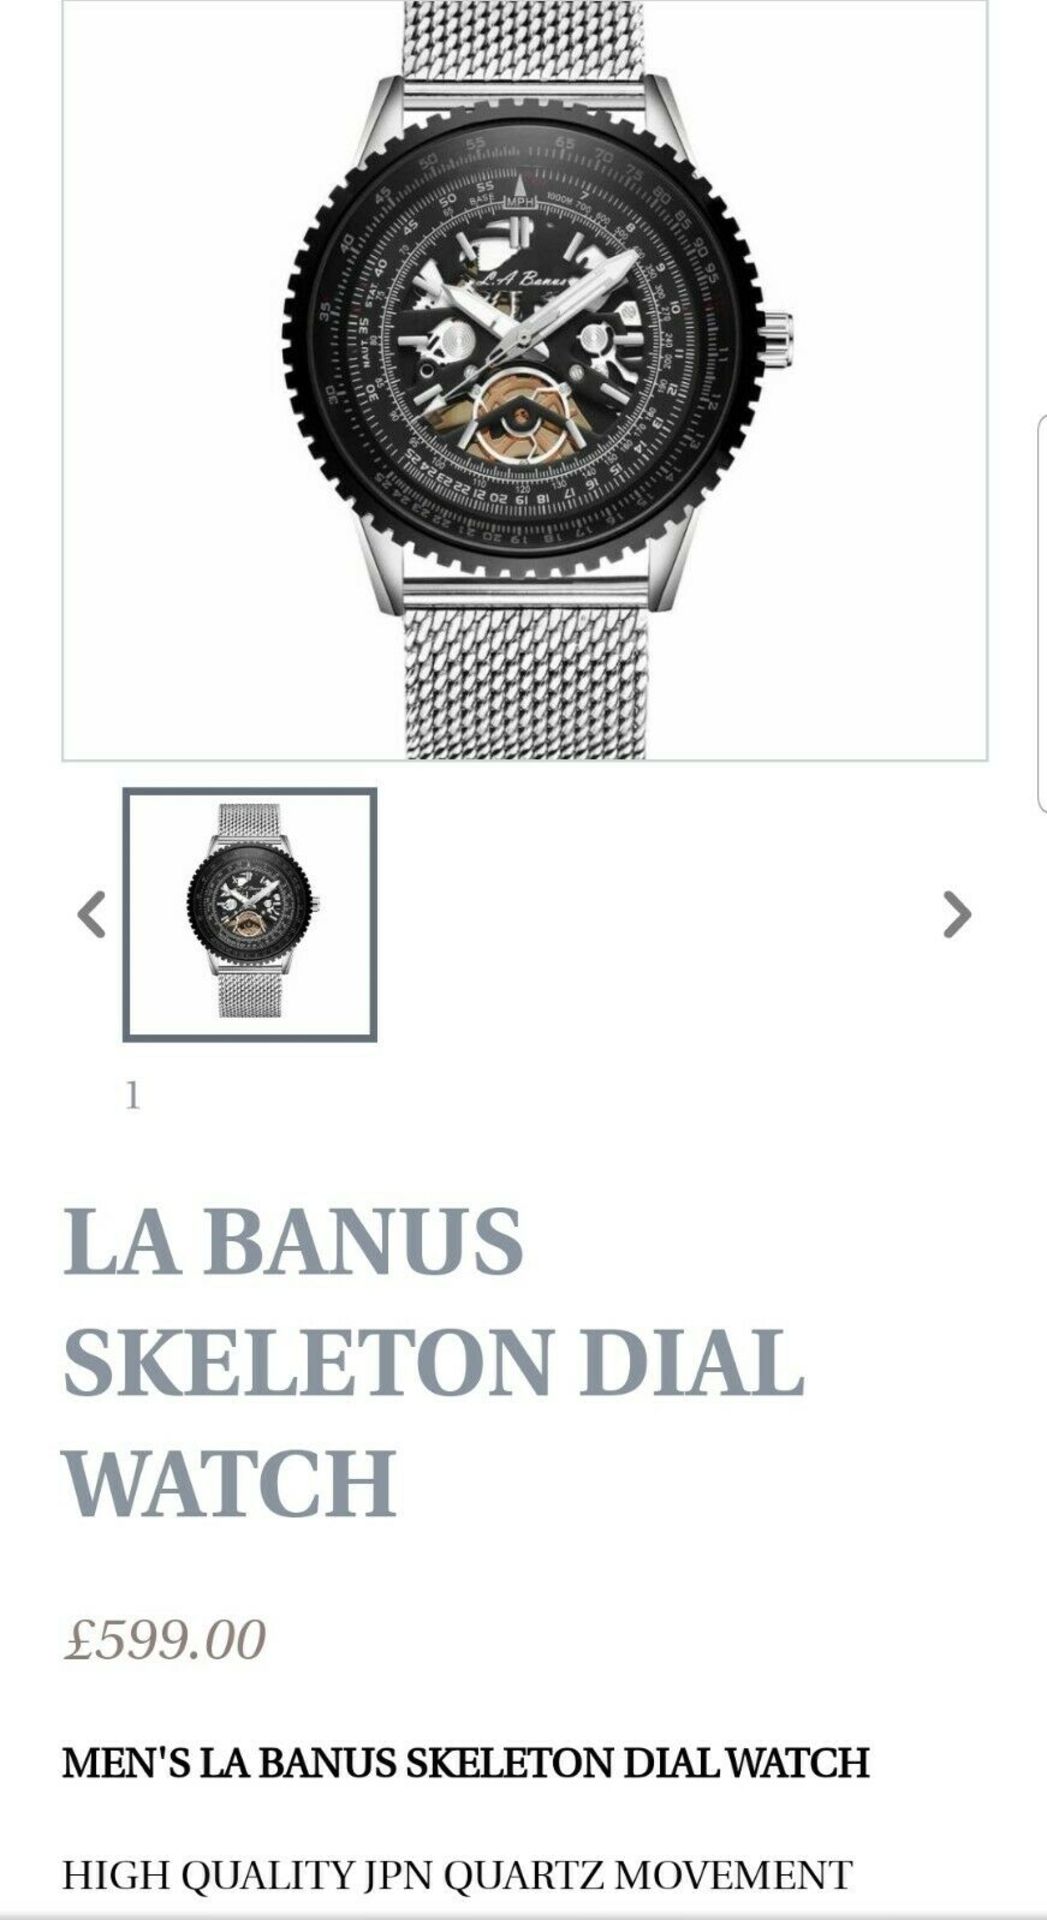 La Banus Men's Skeleton Dial Watch In Silver And Black Rrp £599 - Image 2 of 4